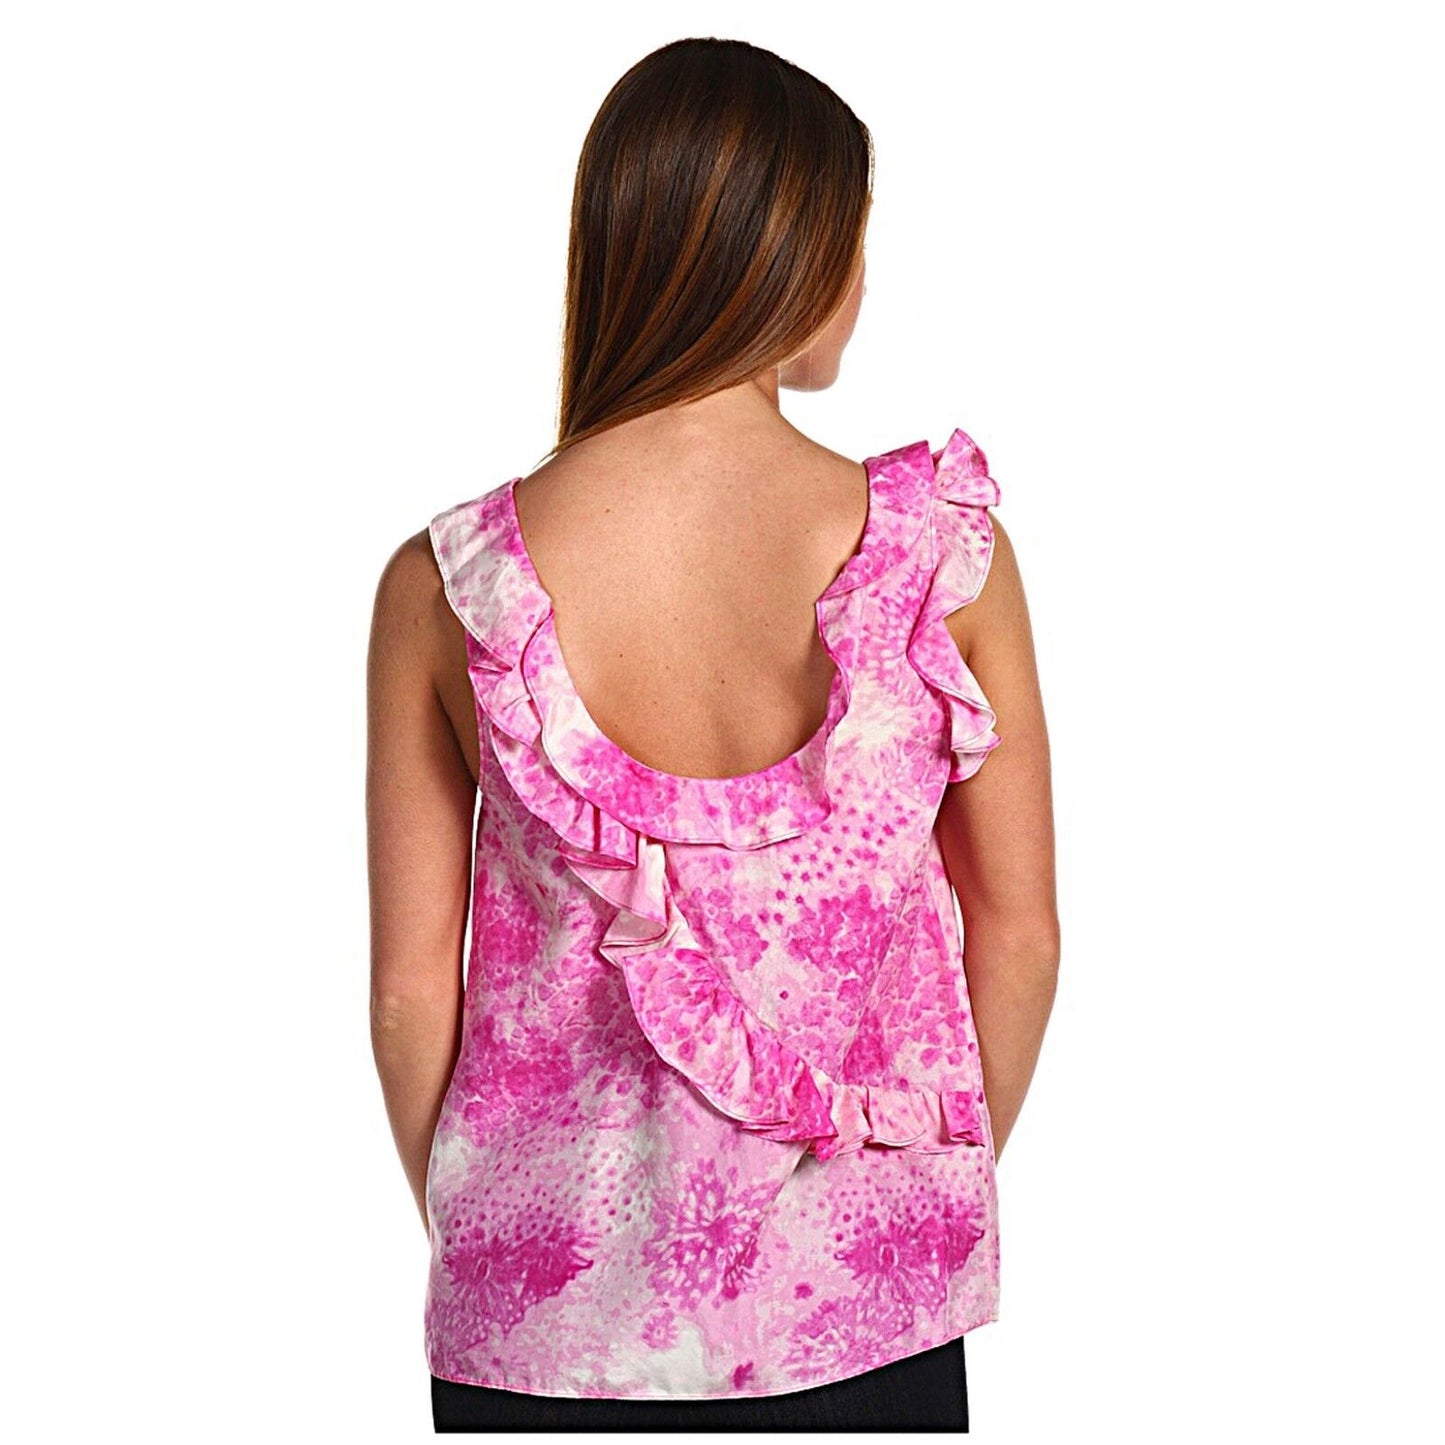 Juicy Couture Pink Floral Tie Dye Silk Top Shirt BLACK LABEL Blouse Sz M NWT